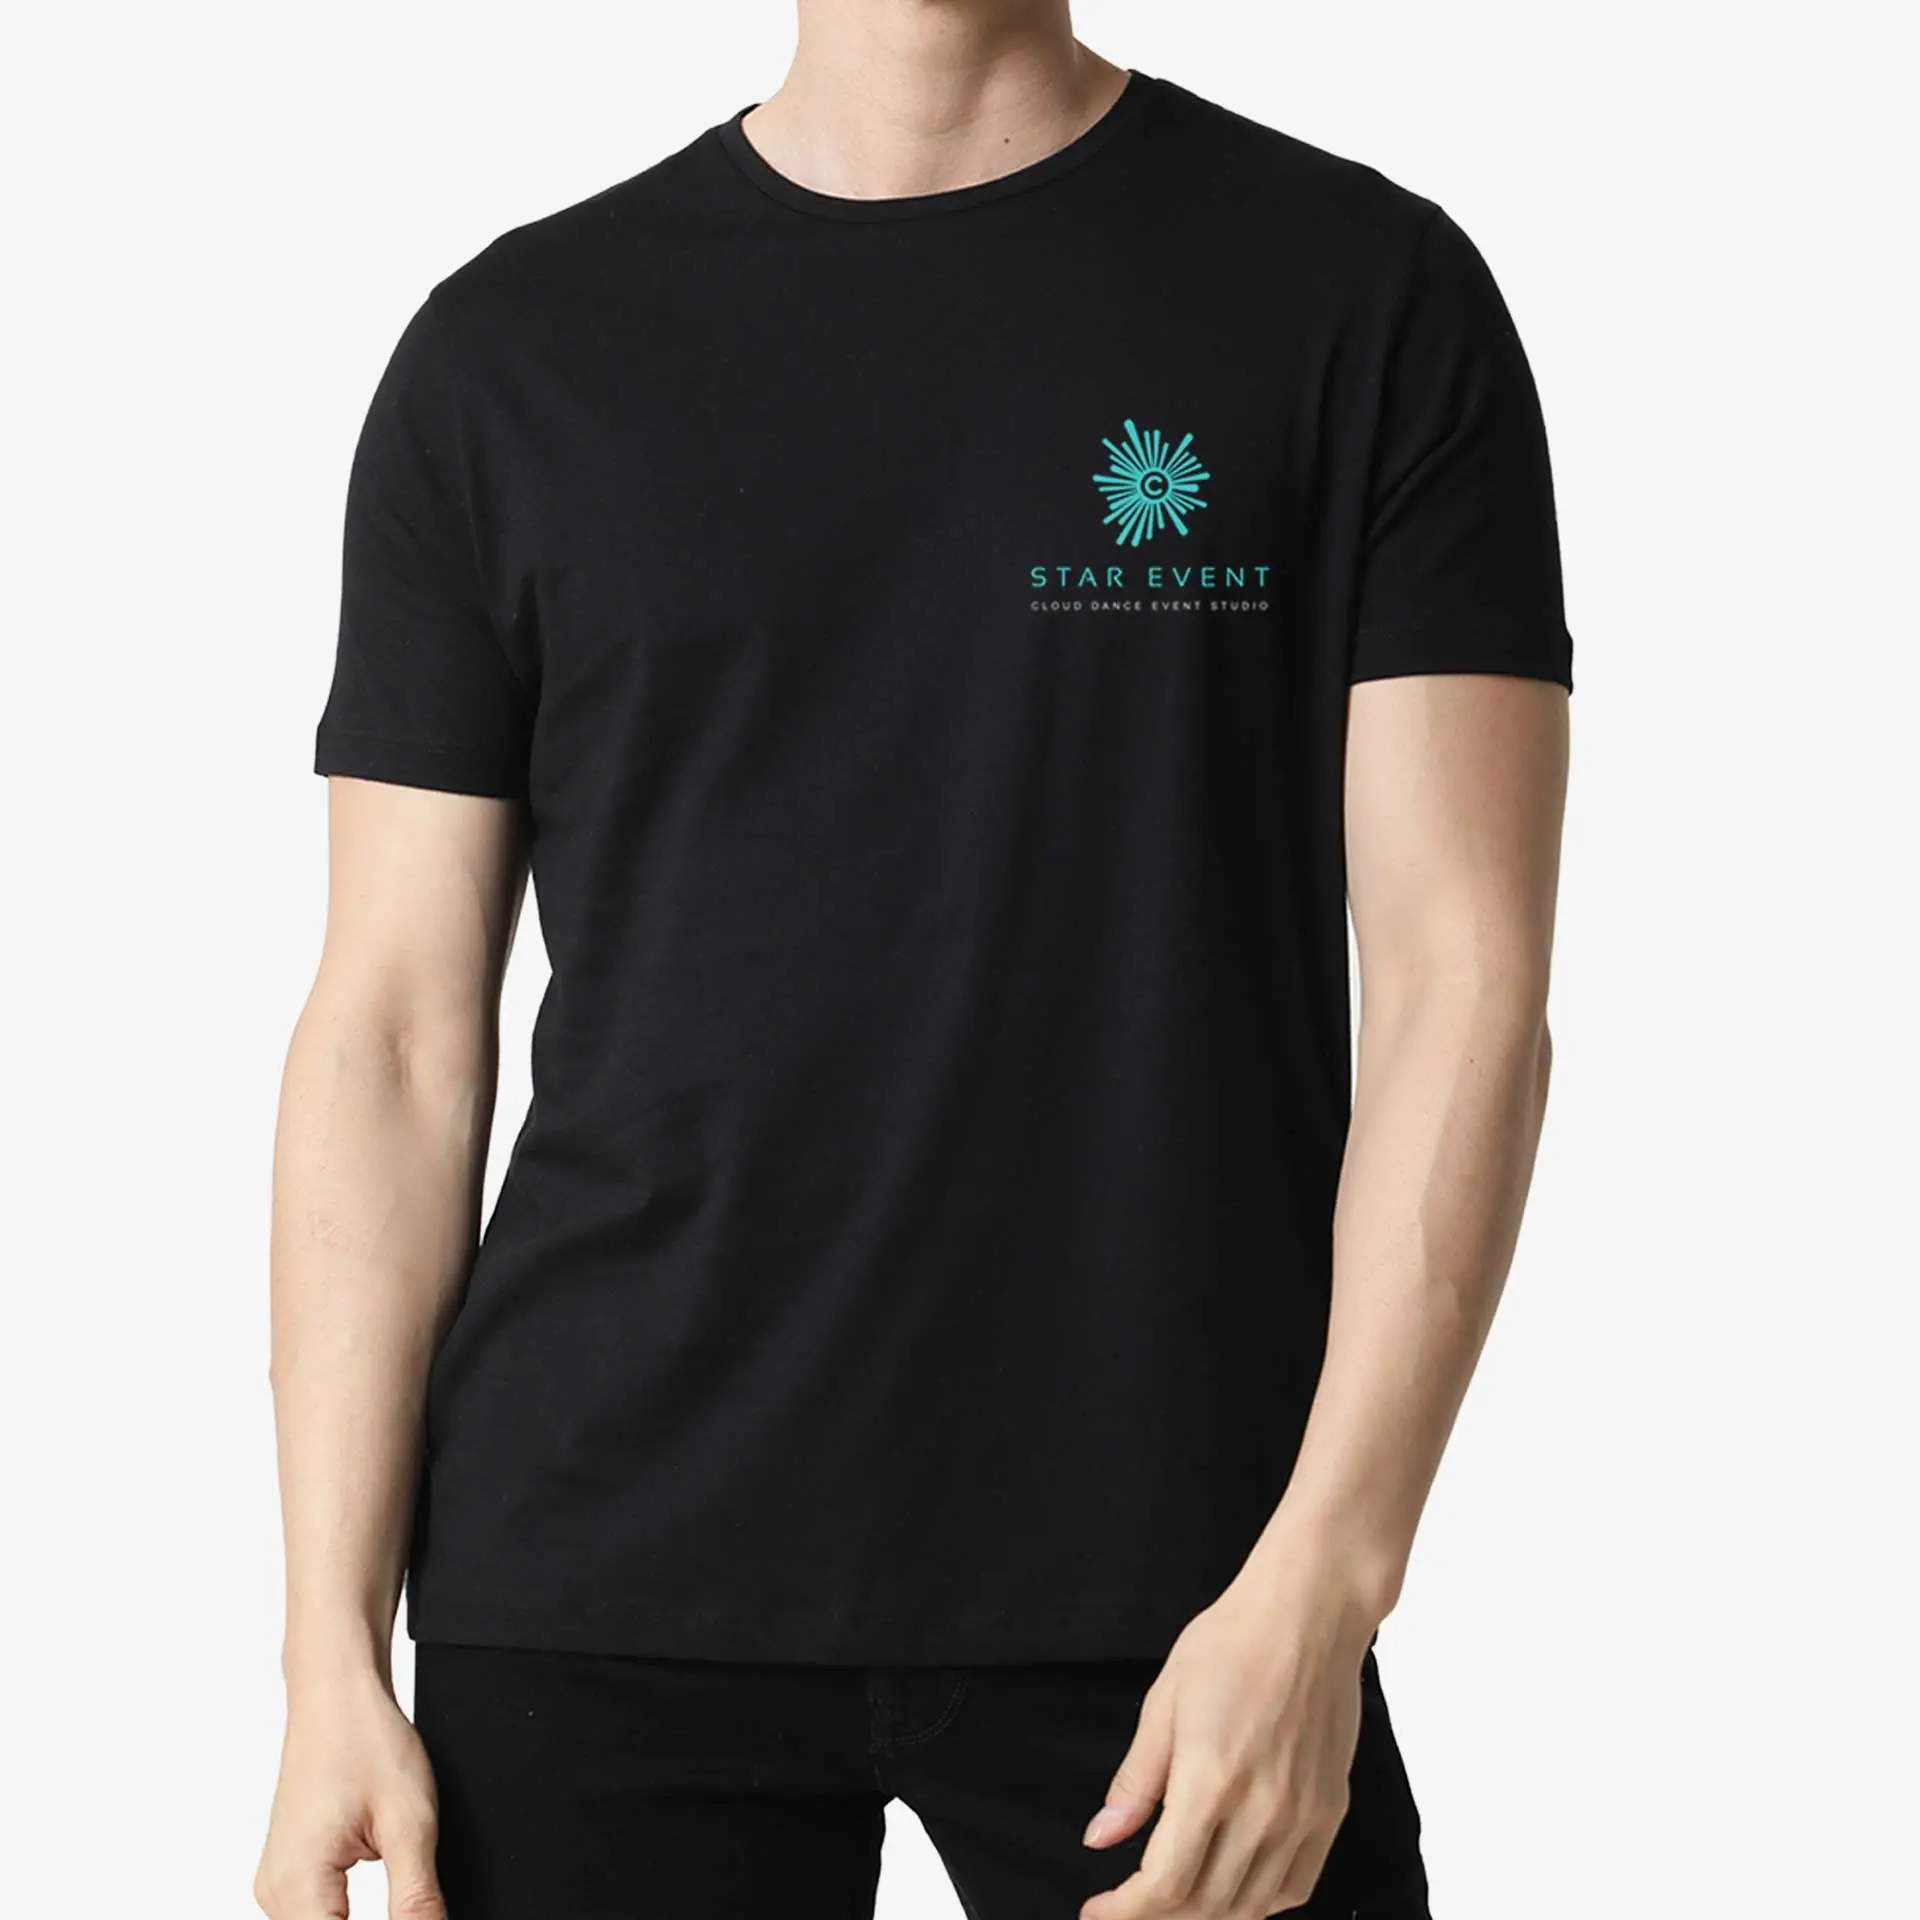 Custom Printed T-Shirts